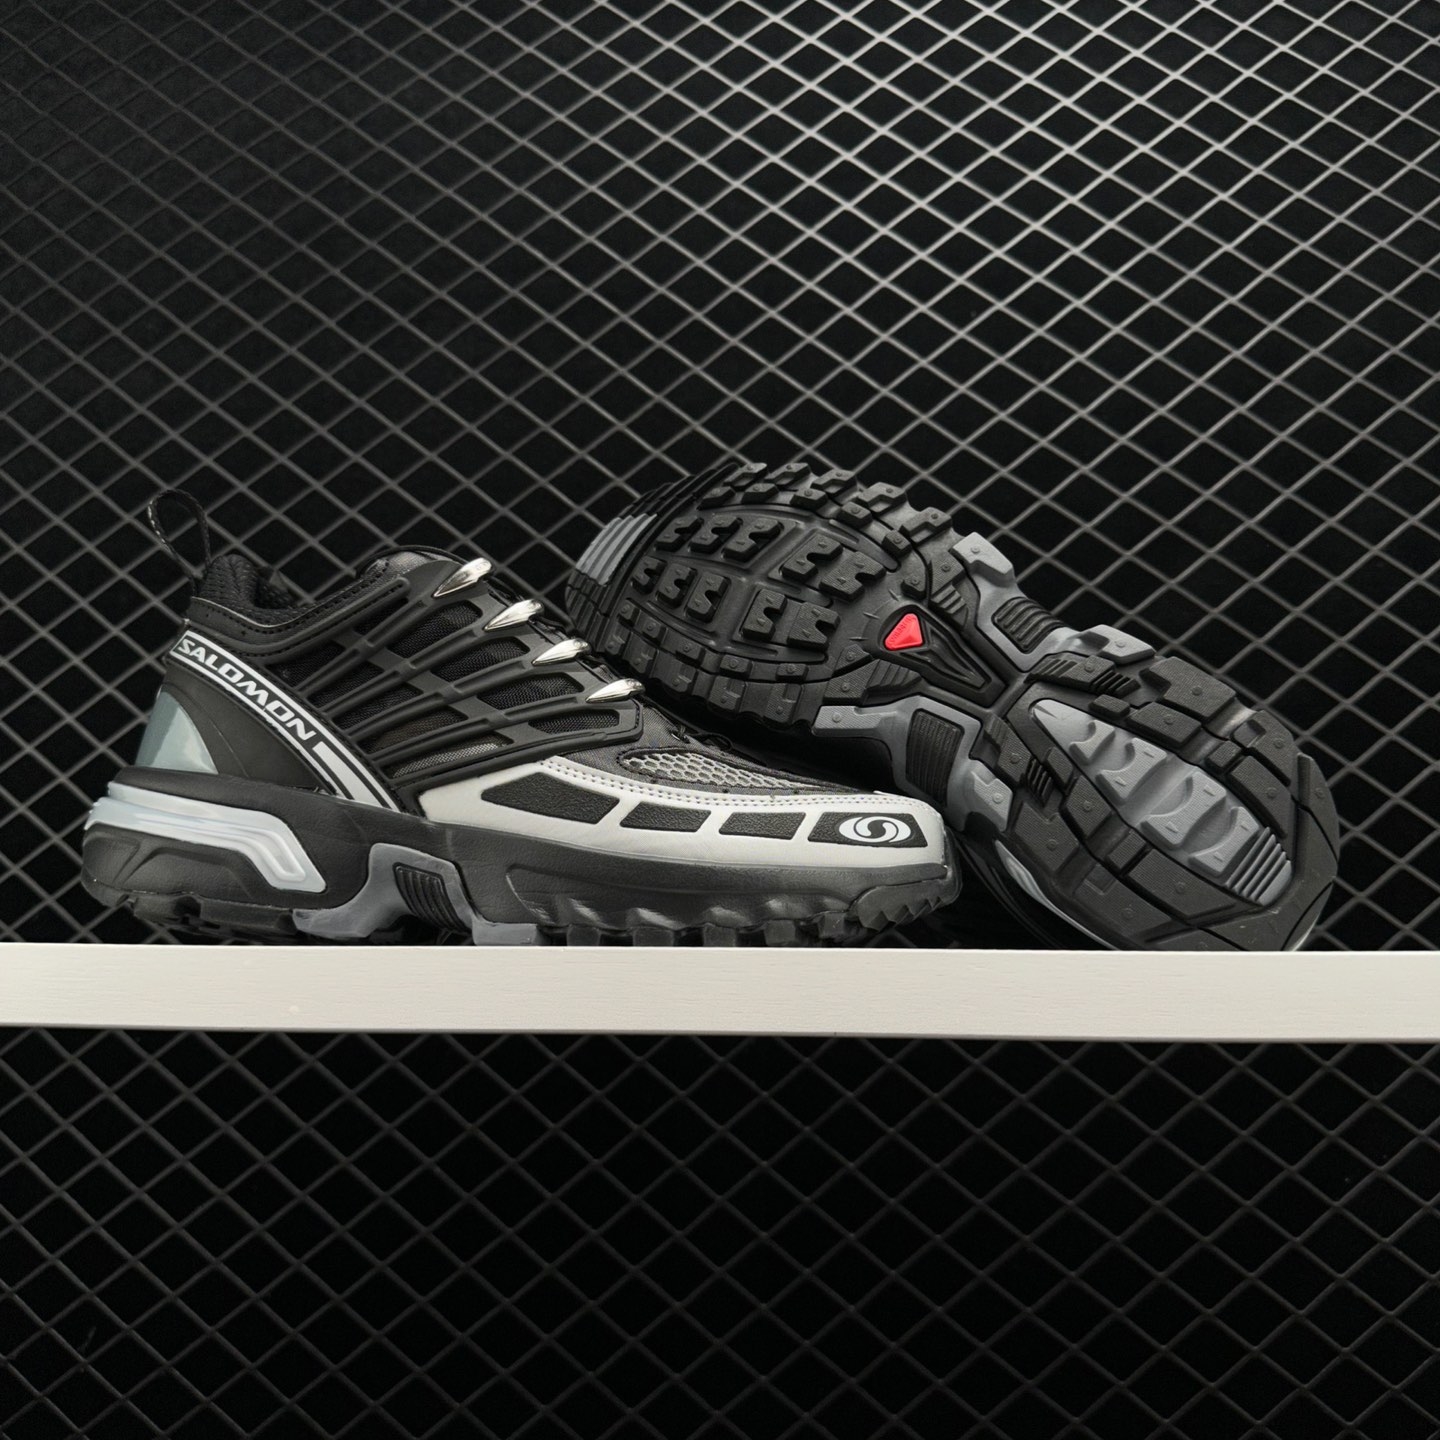 Salomon ACS Pro DSM Black Grey L47349300 - Lightweight and Versatile Outdoor Shoes